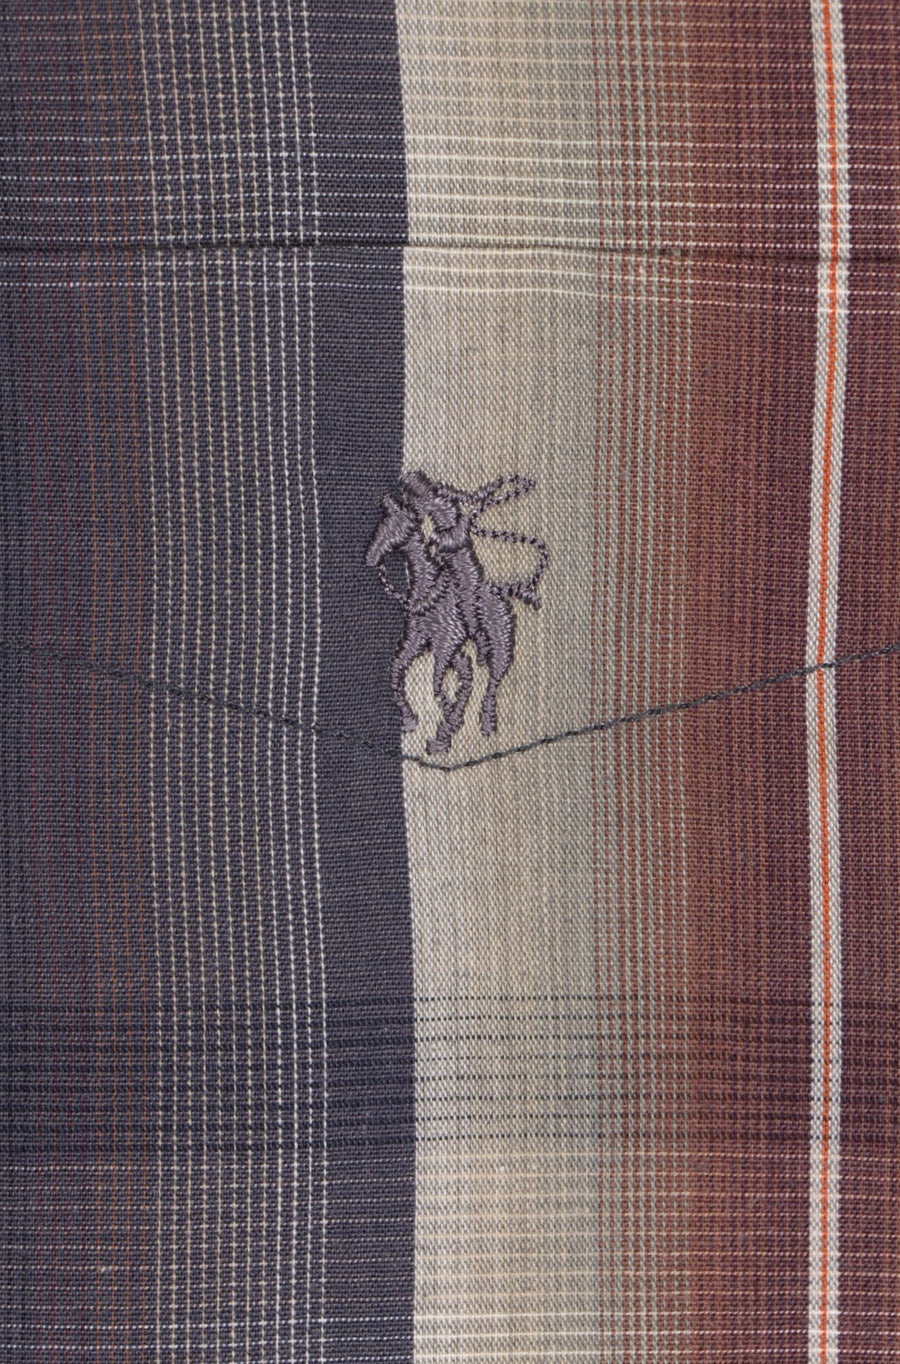 BOOTLEG Polo Jeans Madras Check Short Sleeve Shirt (L-XL)